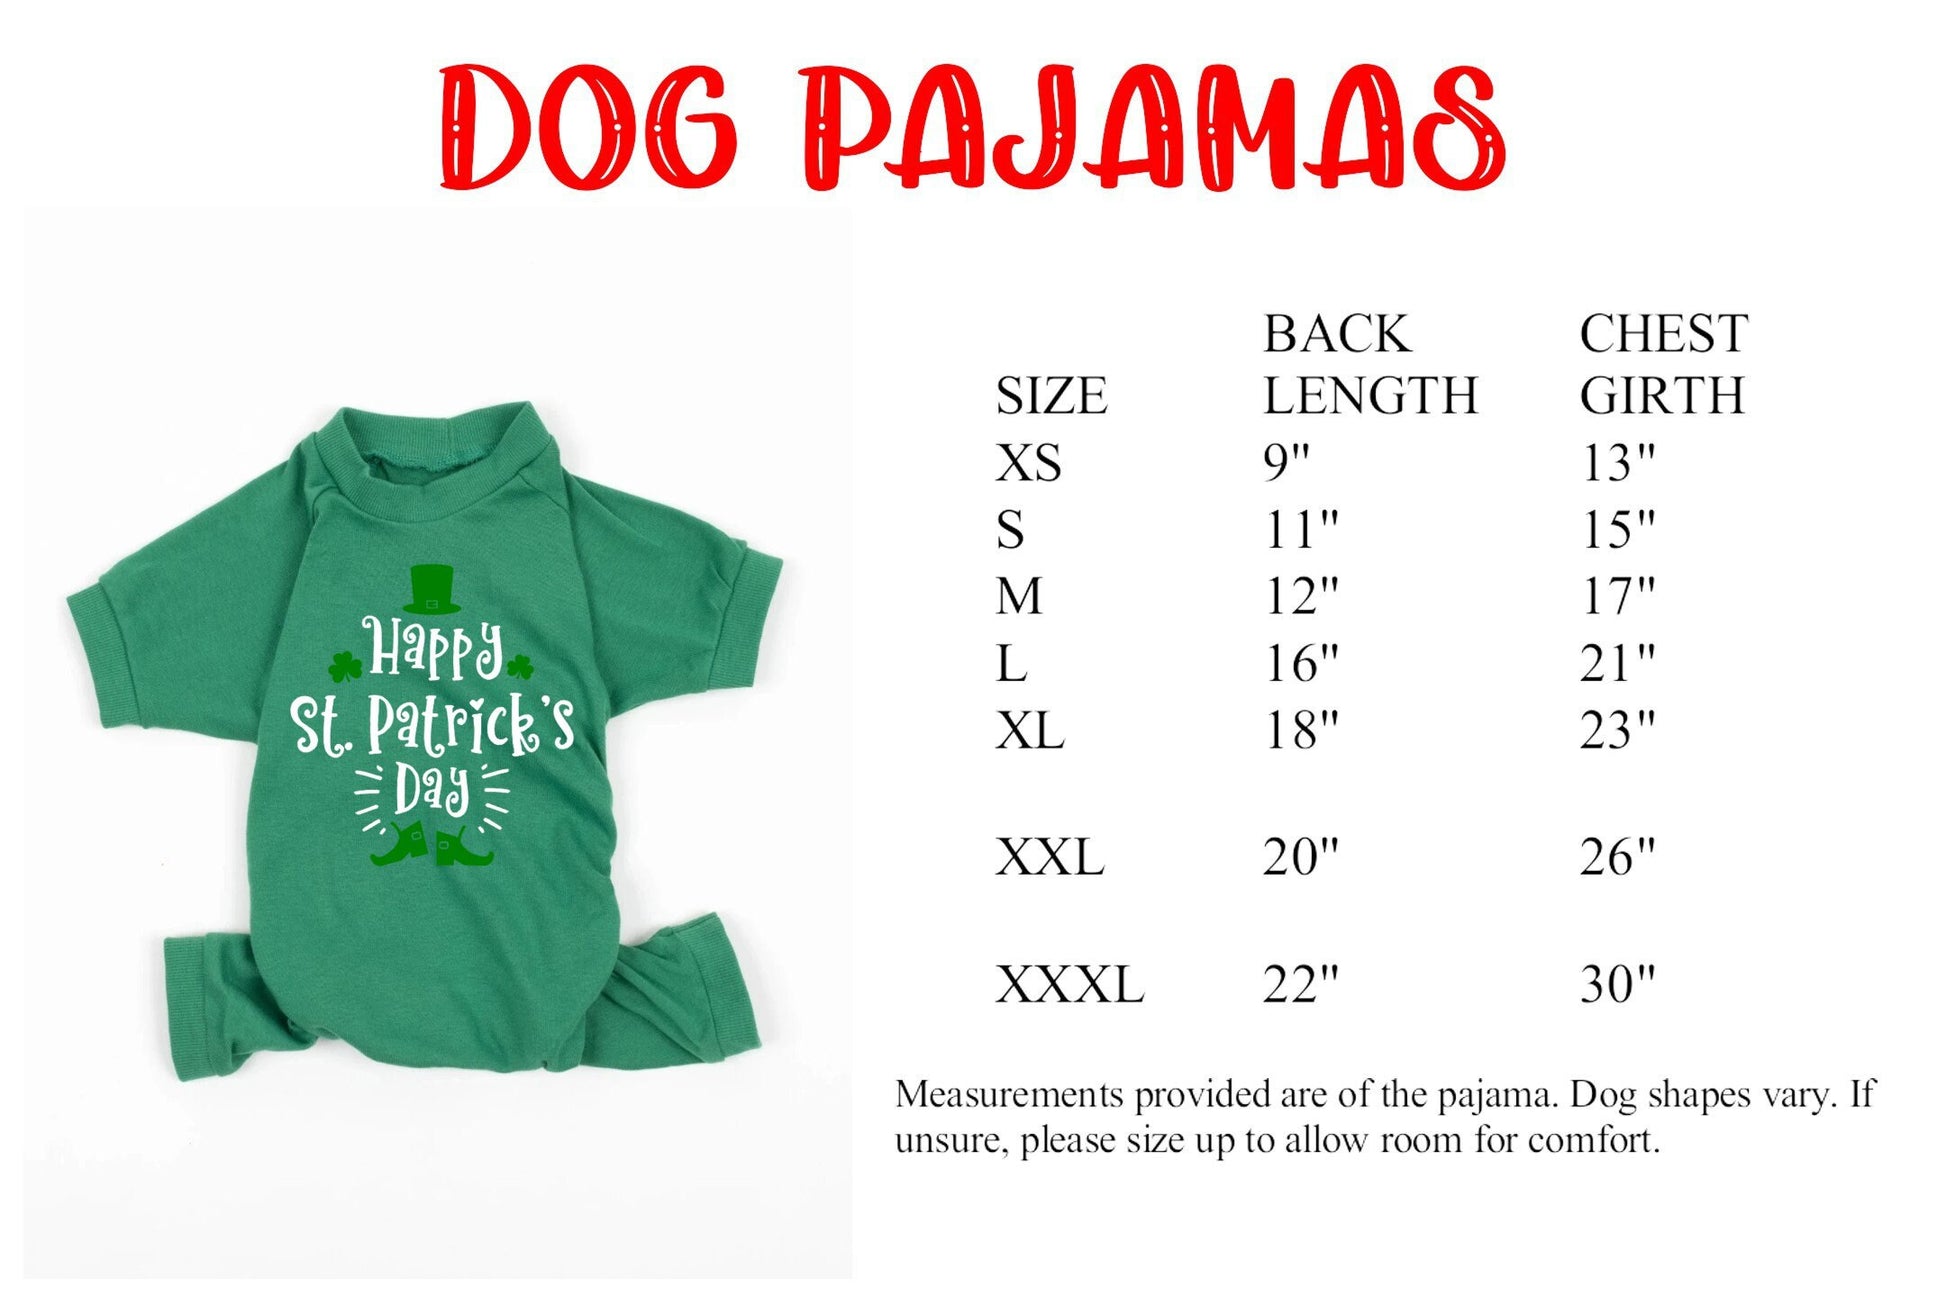 Happy St Patrick's Day Pajamas - LV Green Striped St Patrick's Day Pajamas